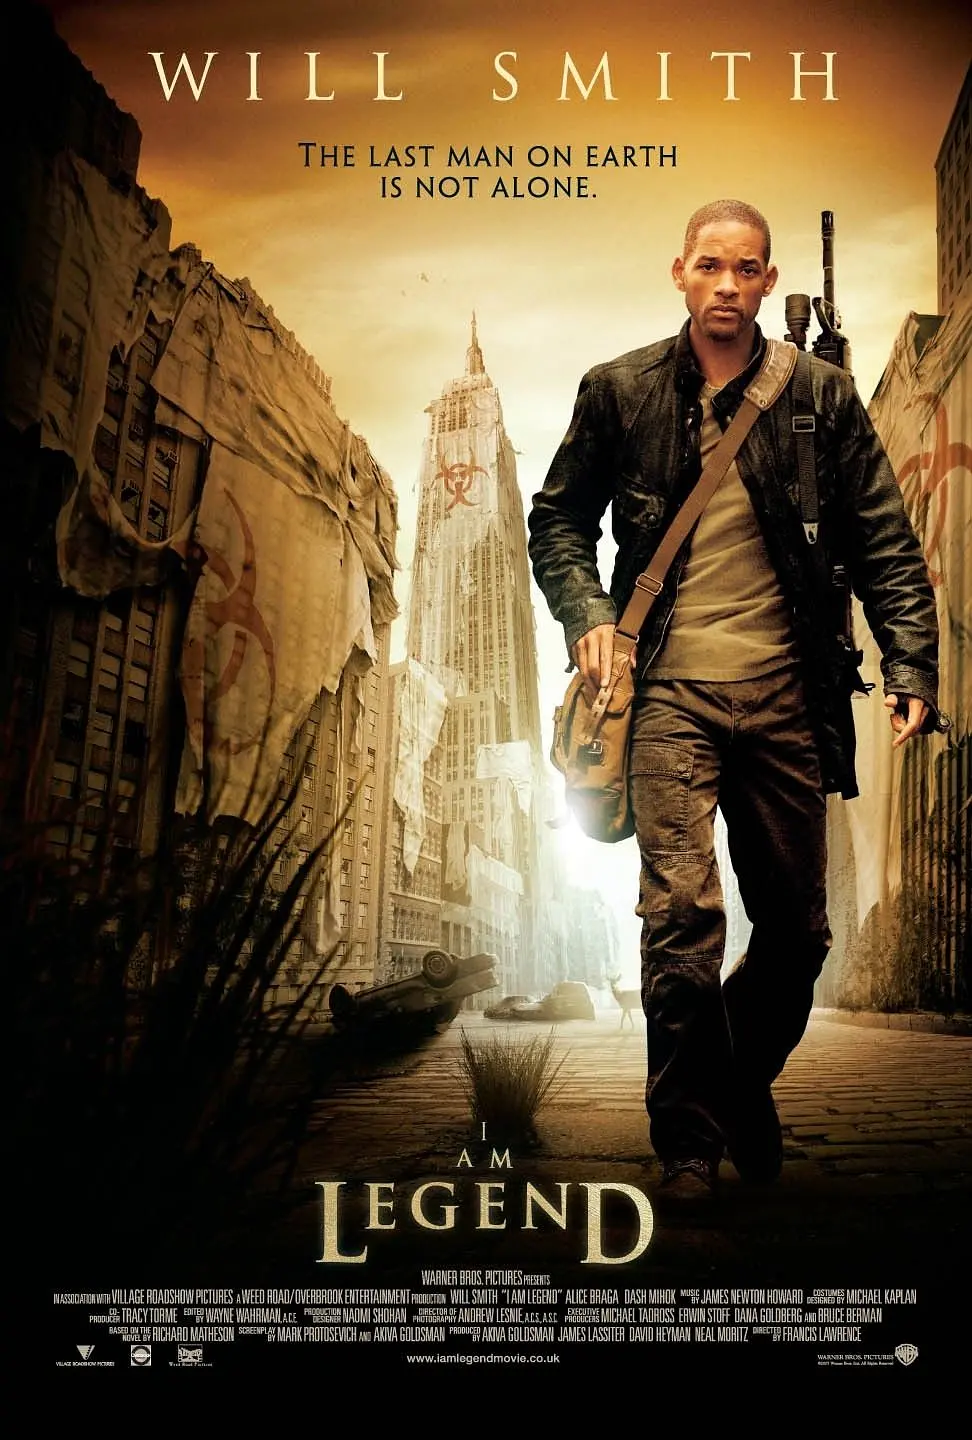 I Am Legend:The creation of a legend